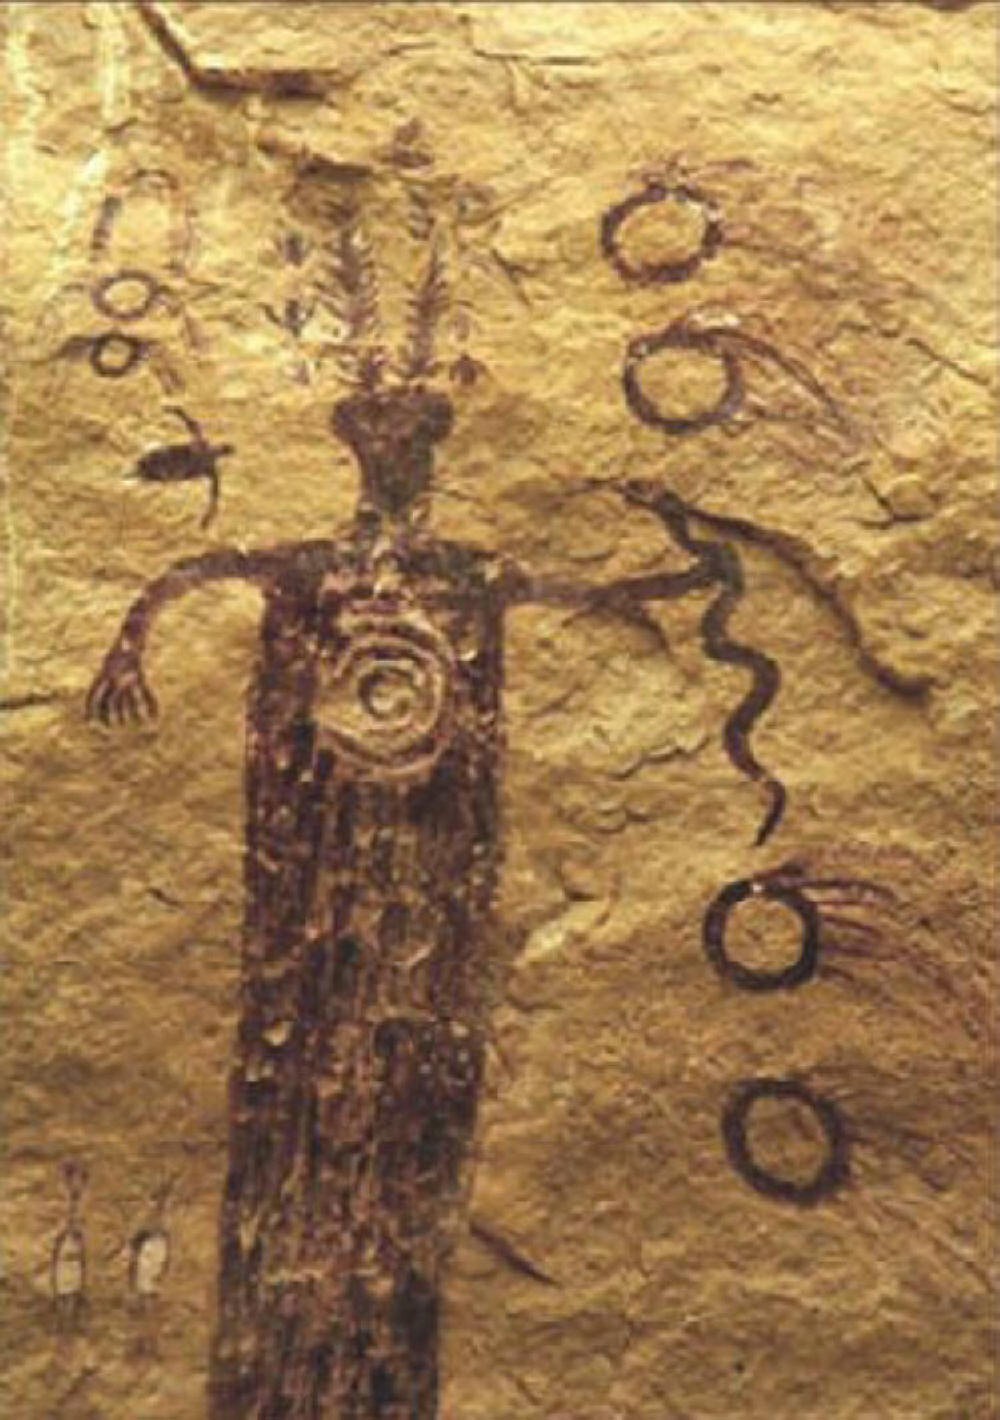 Spiral, devil, and serpent petroglyph